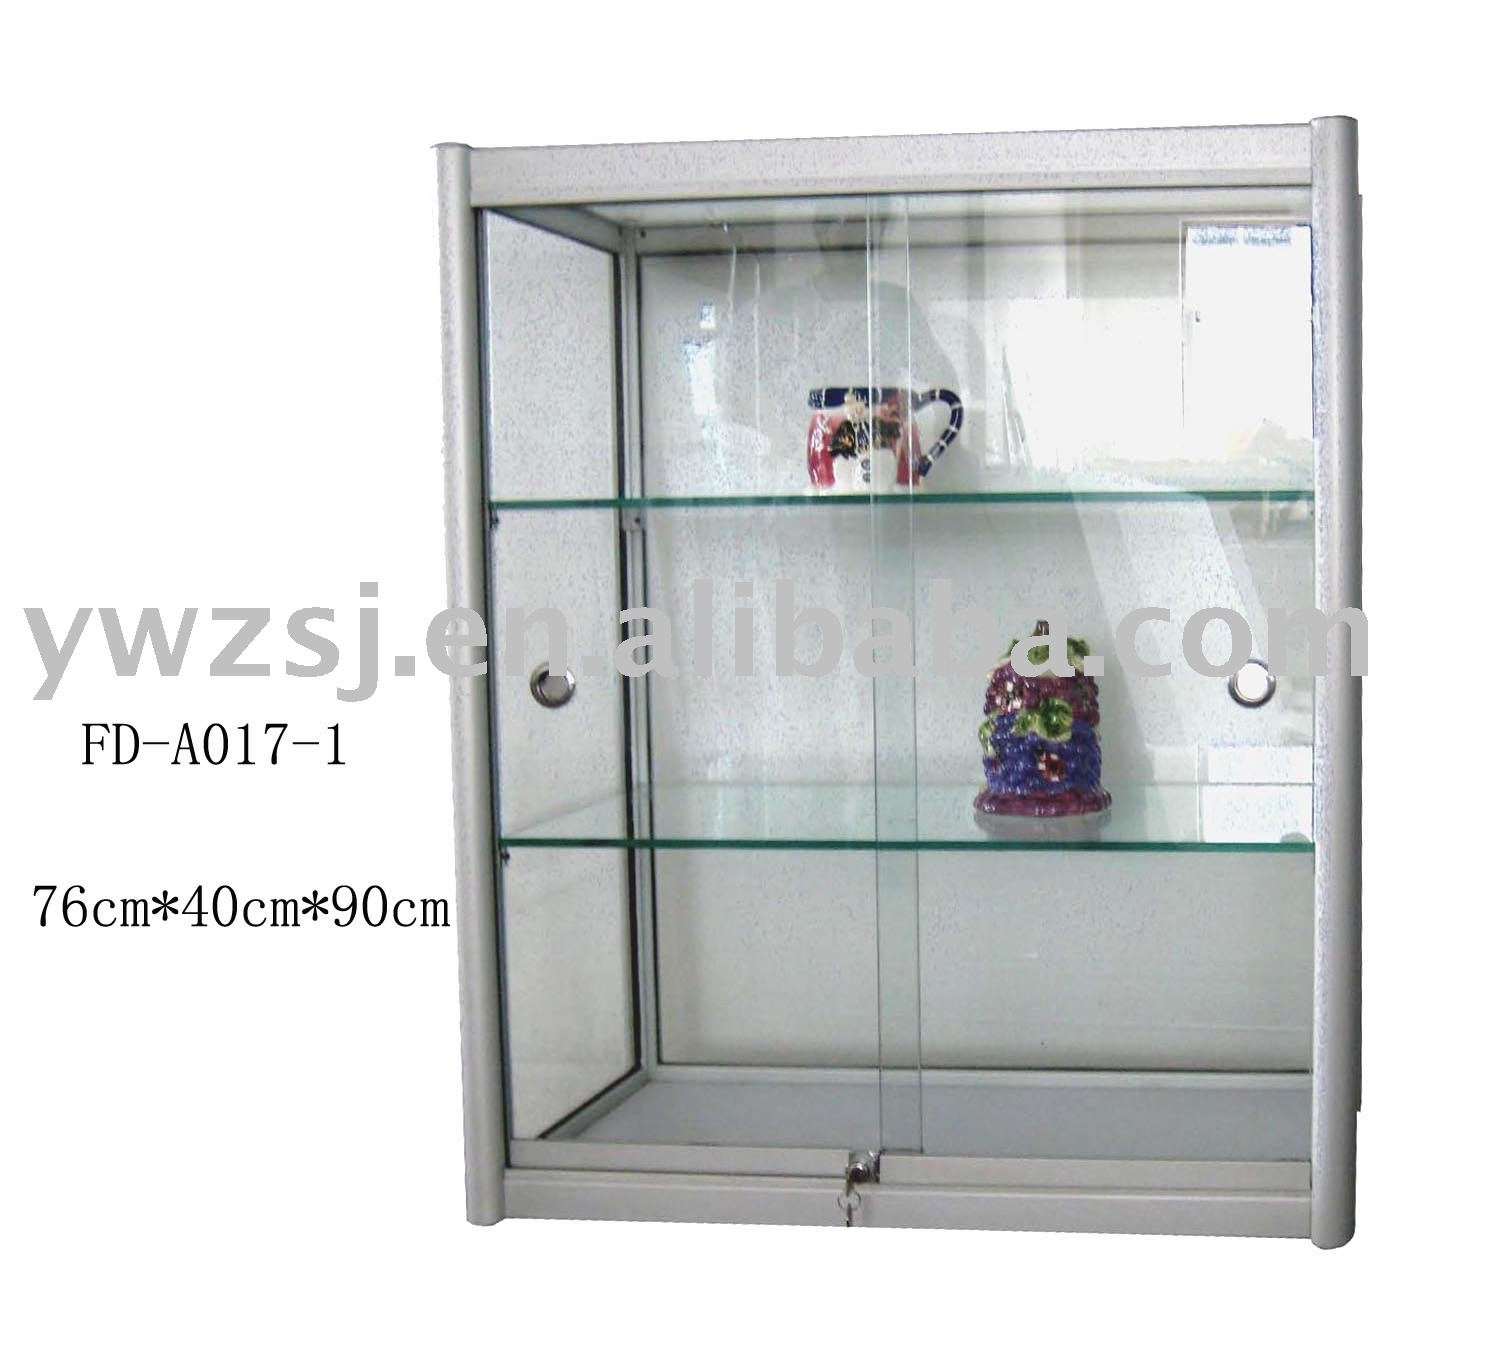 Sliding Glass Door Tracks For Cabinets1488 X 1353